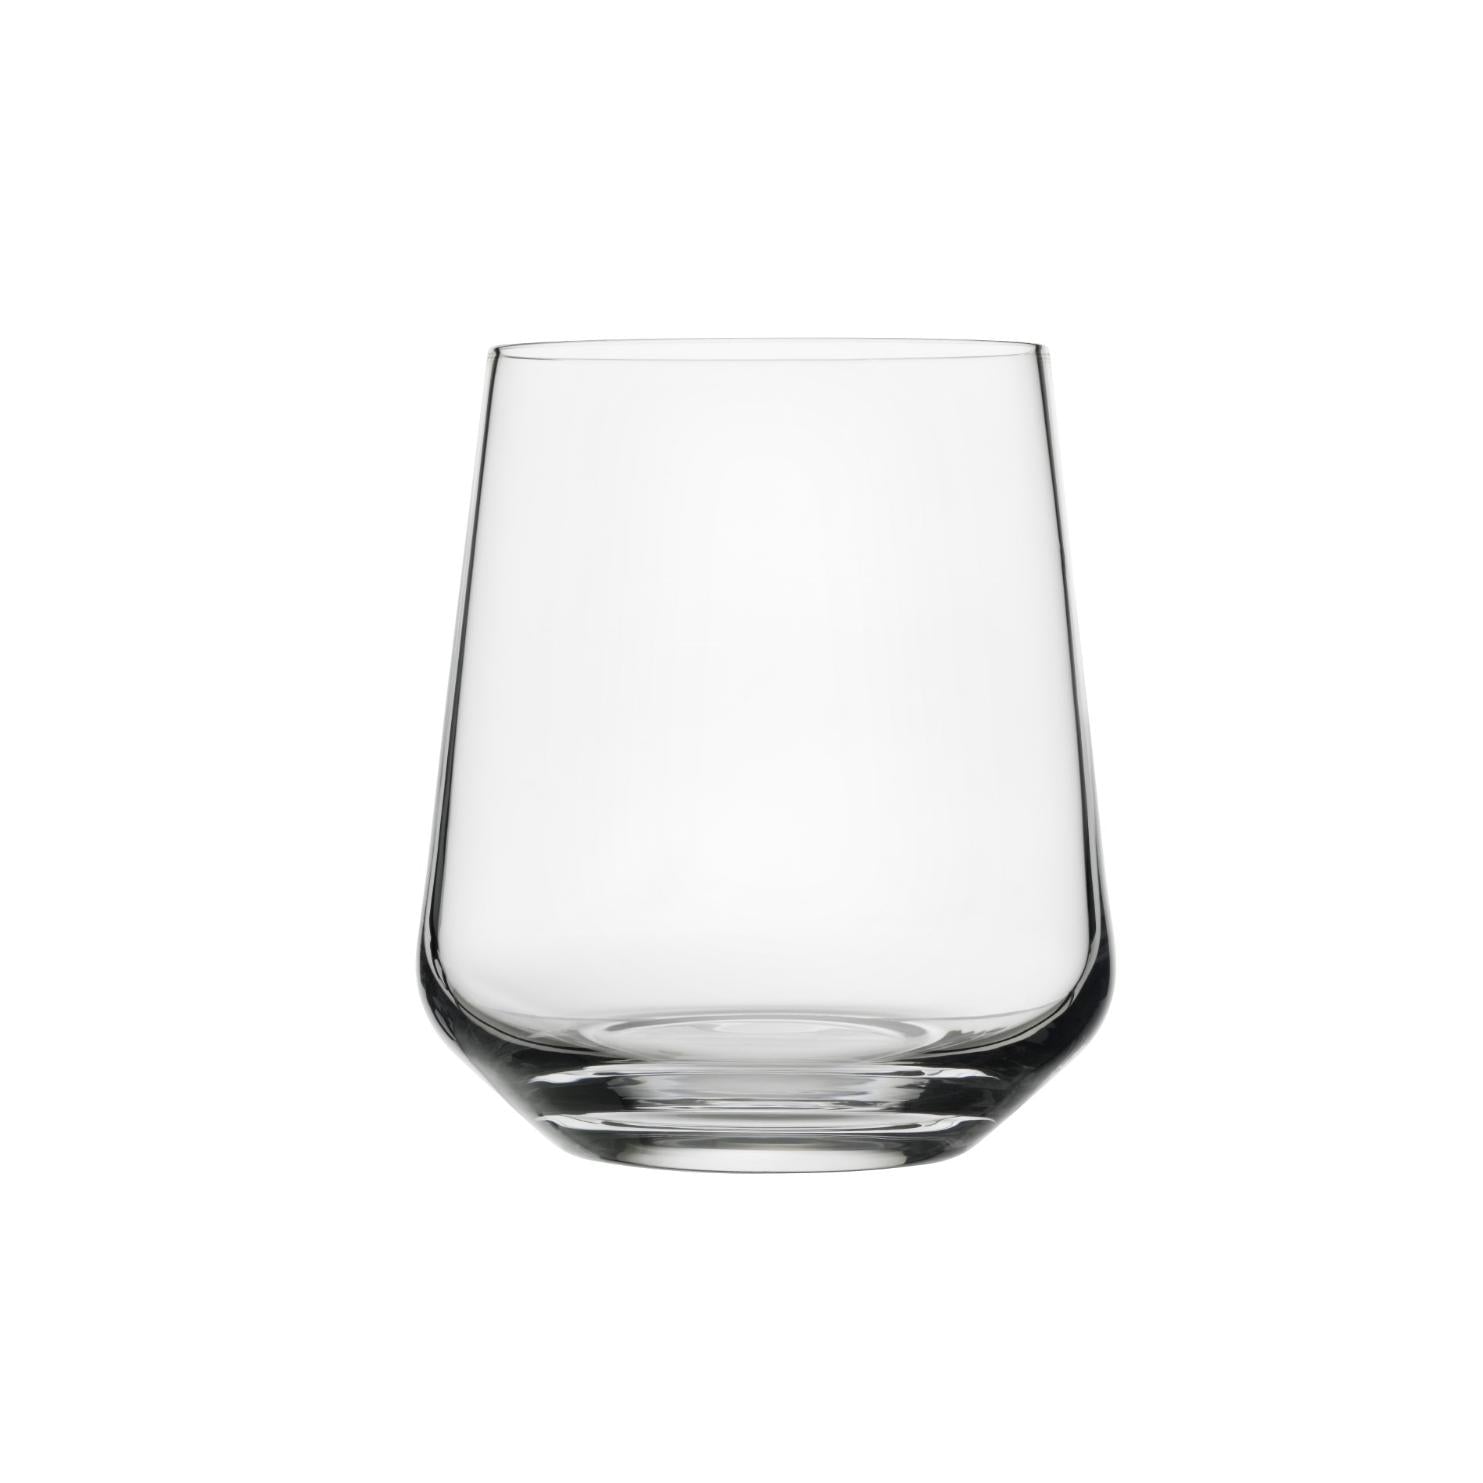 Iittala Essence Wasserglas klar 2pcs, 35cl